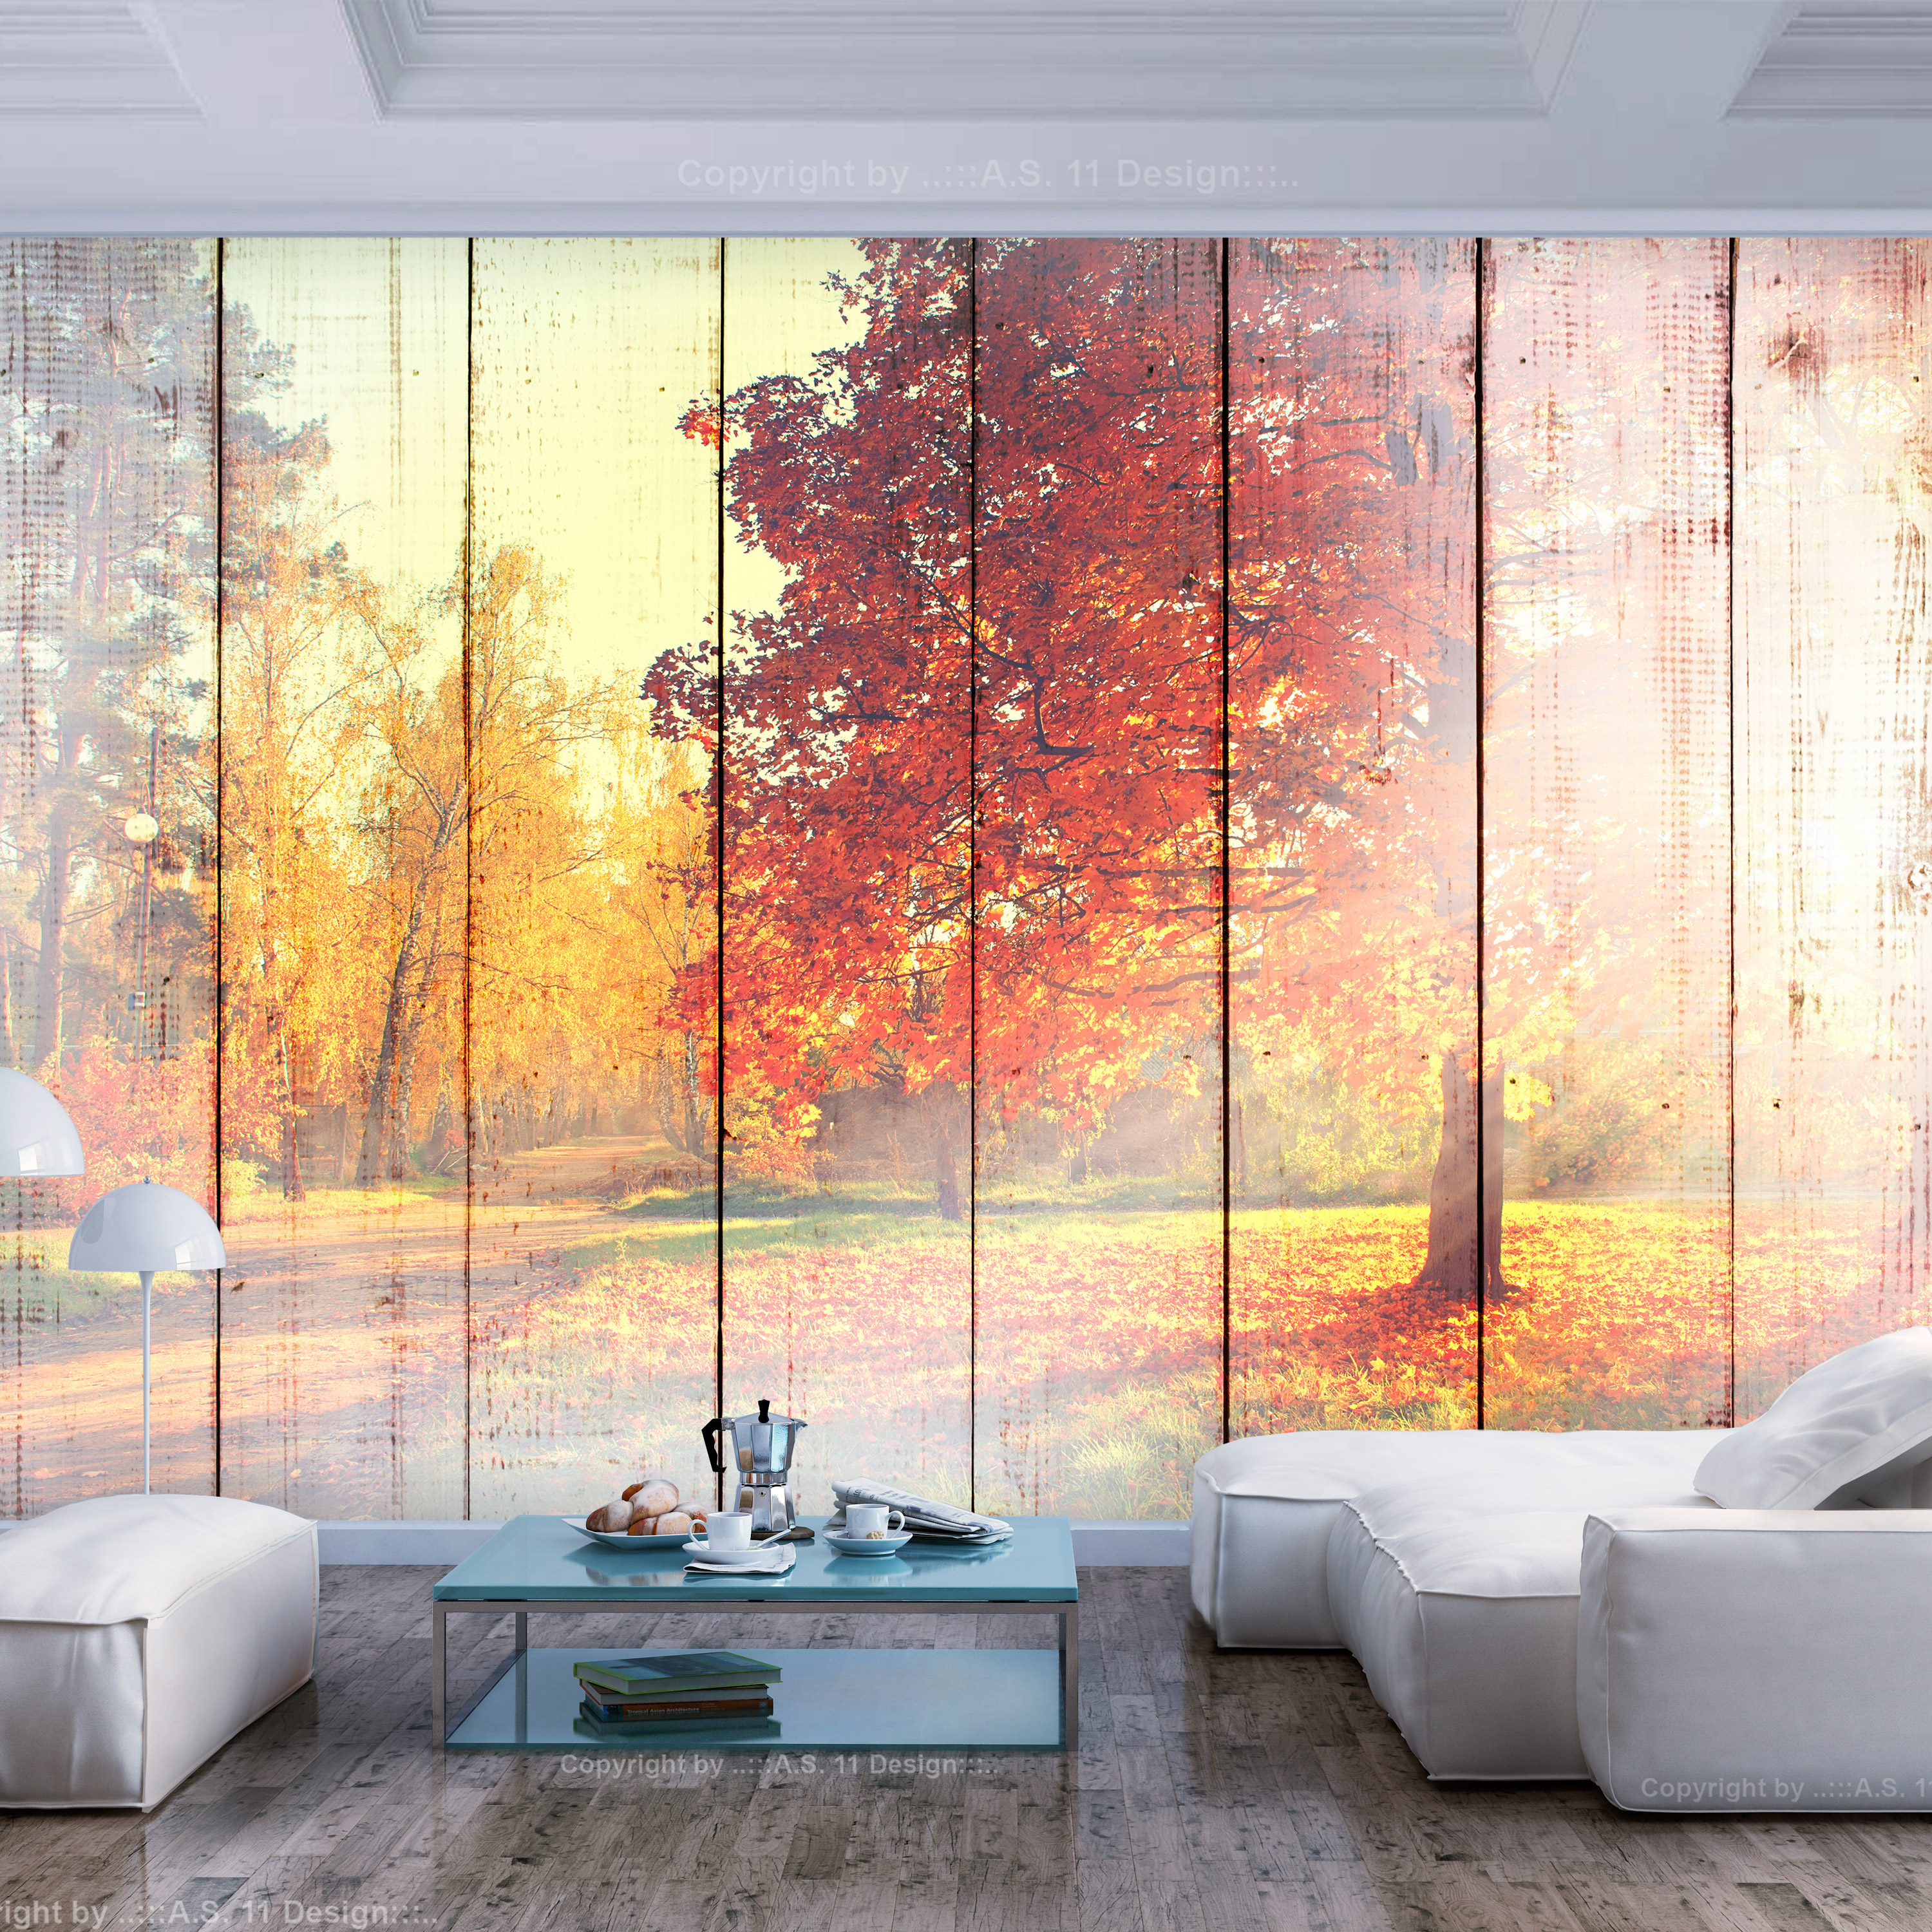 Self-adhesive Wallpaper - Autumn Sun - 196x140